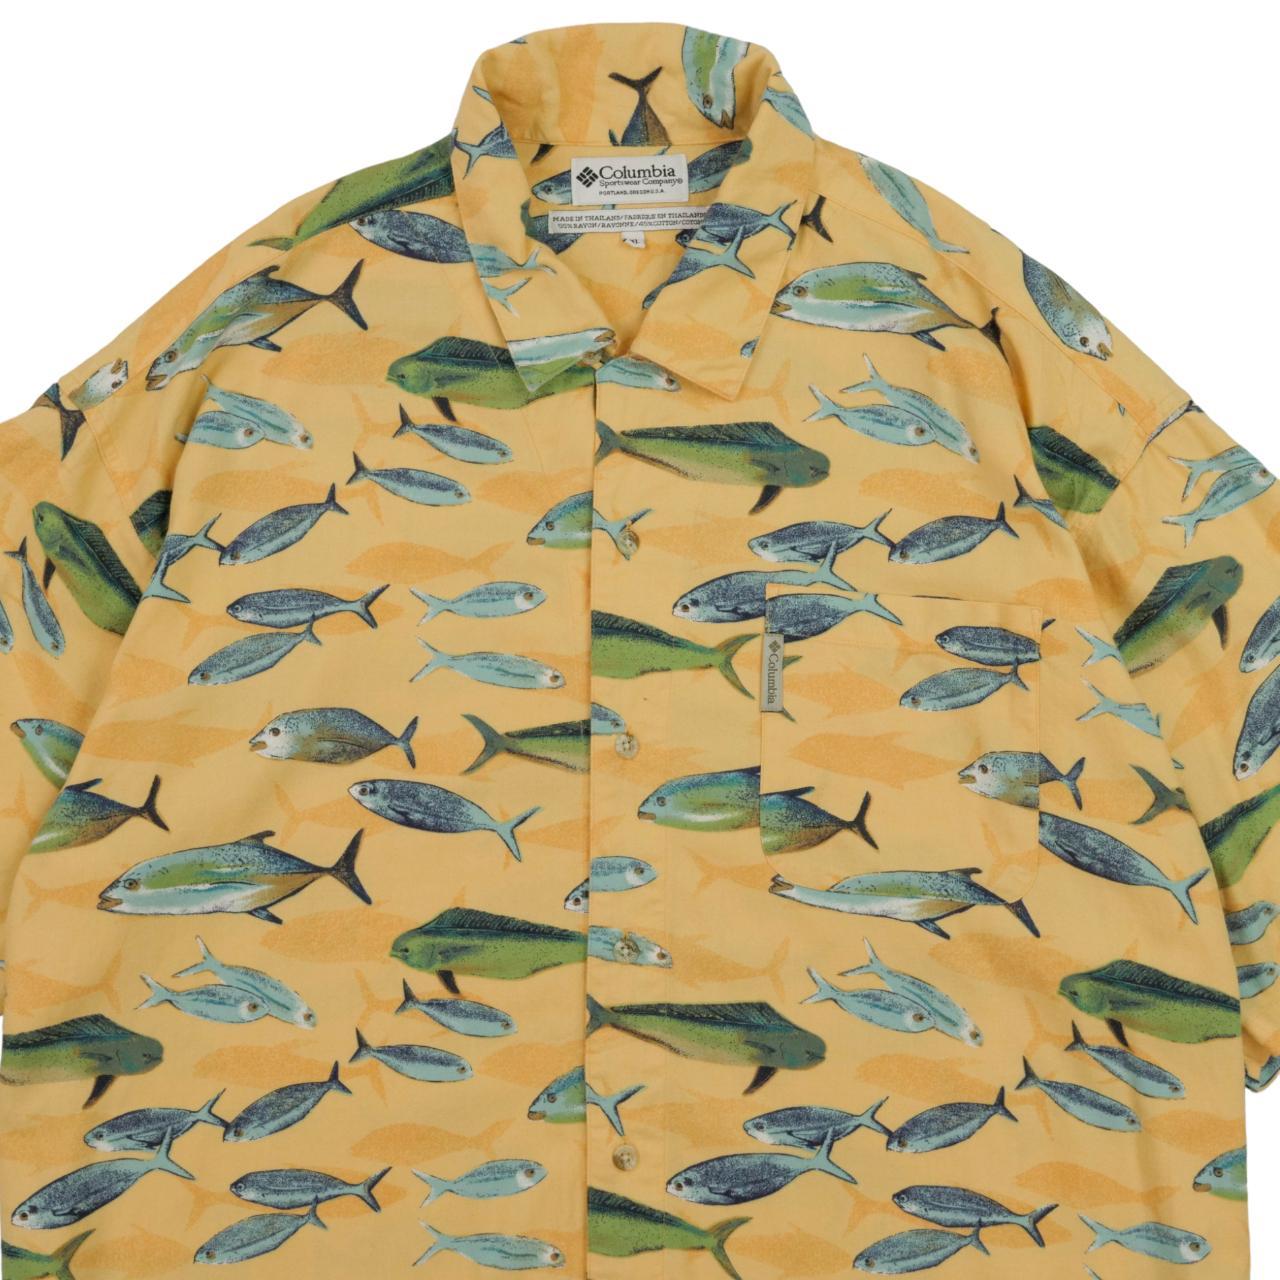 Vintage Colombia Sportswear Fish Button Shirt Size XL